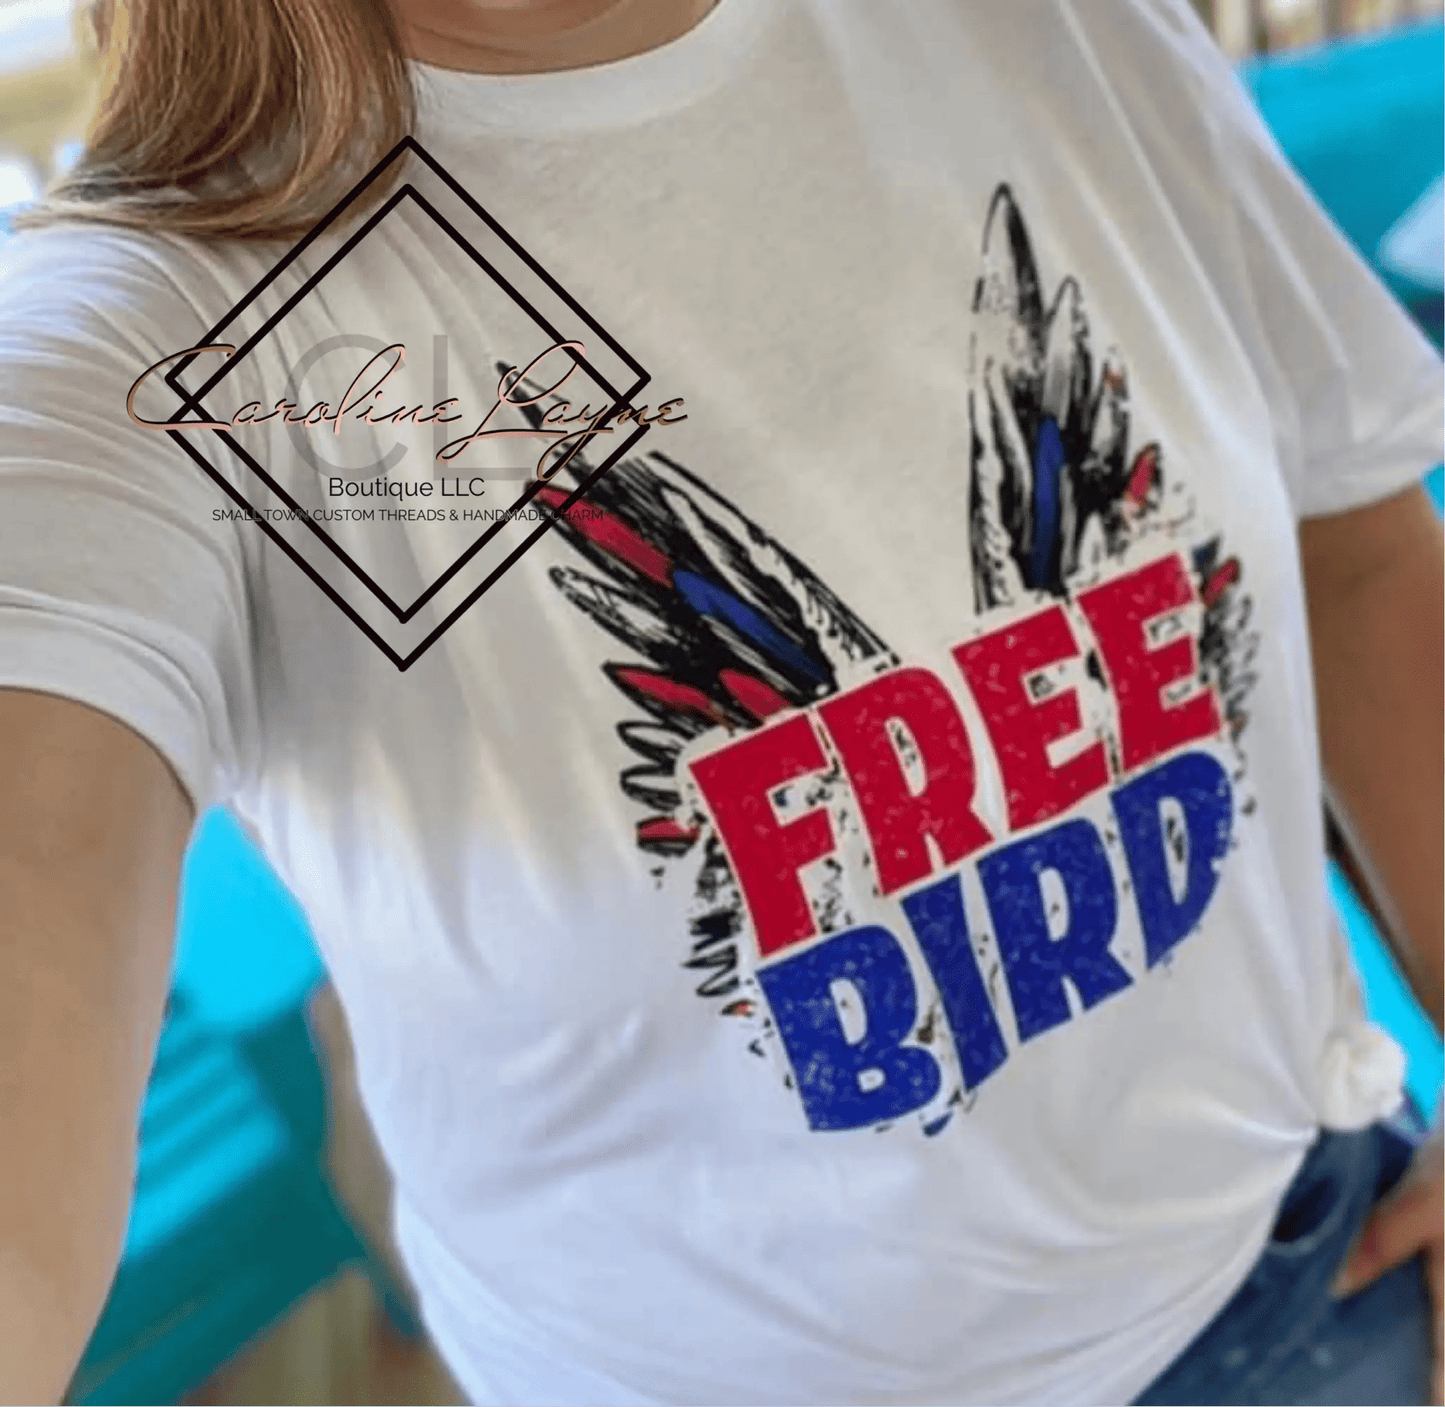 Free Bird Tee - Caroline Layne Boutique LLC